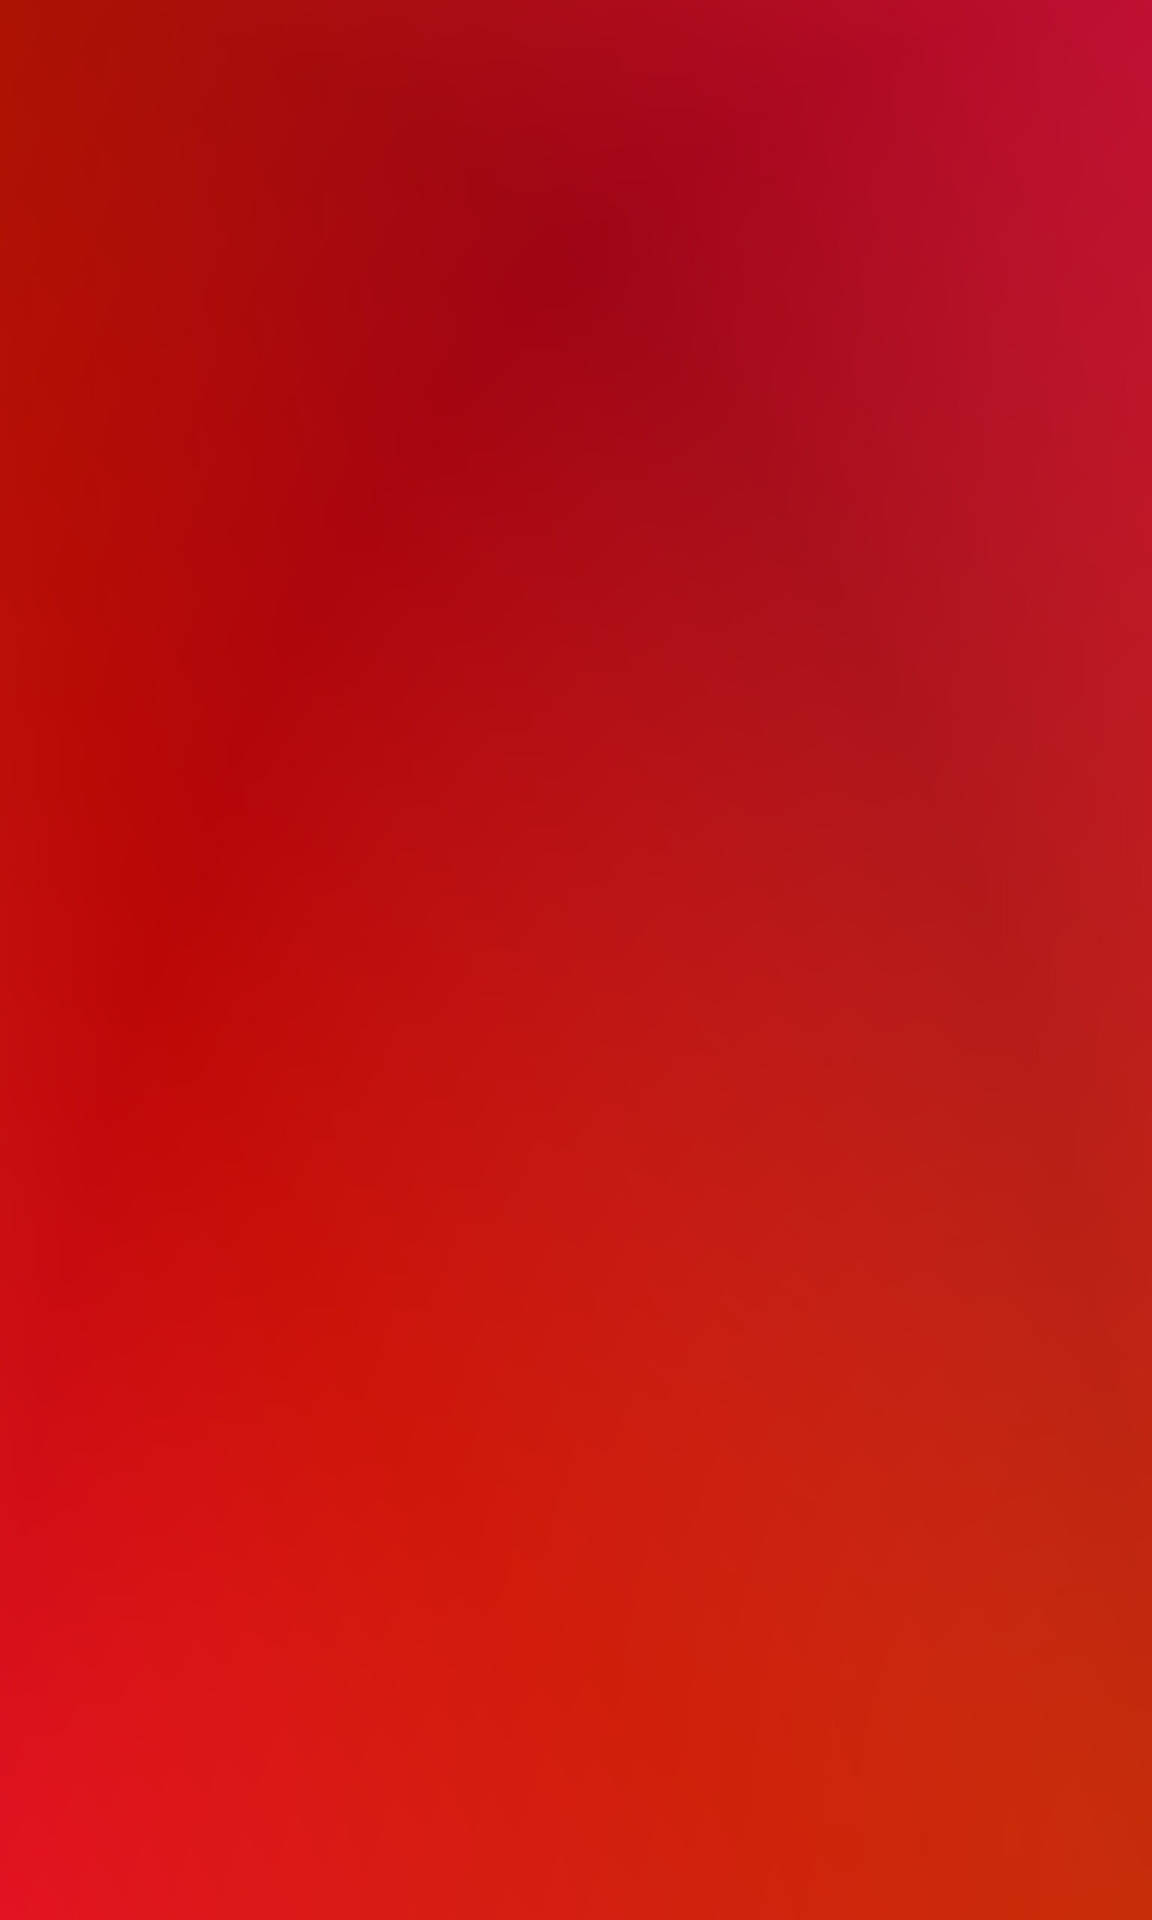 Dark Red Plain Hd Iphone Wallpaper Wallpaper